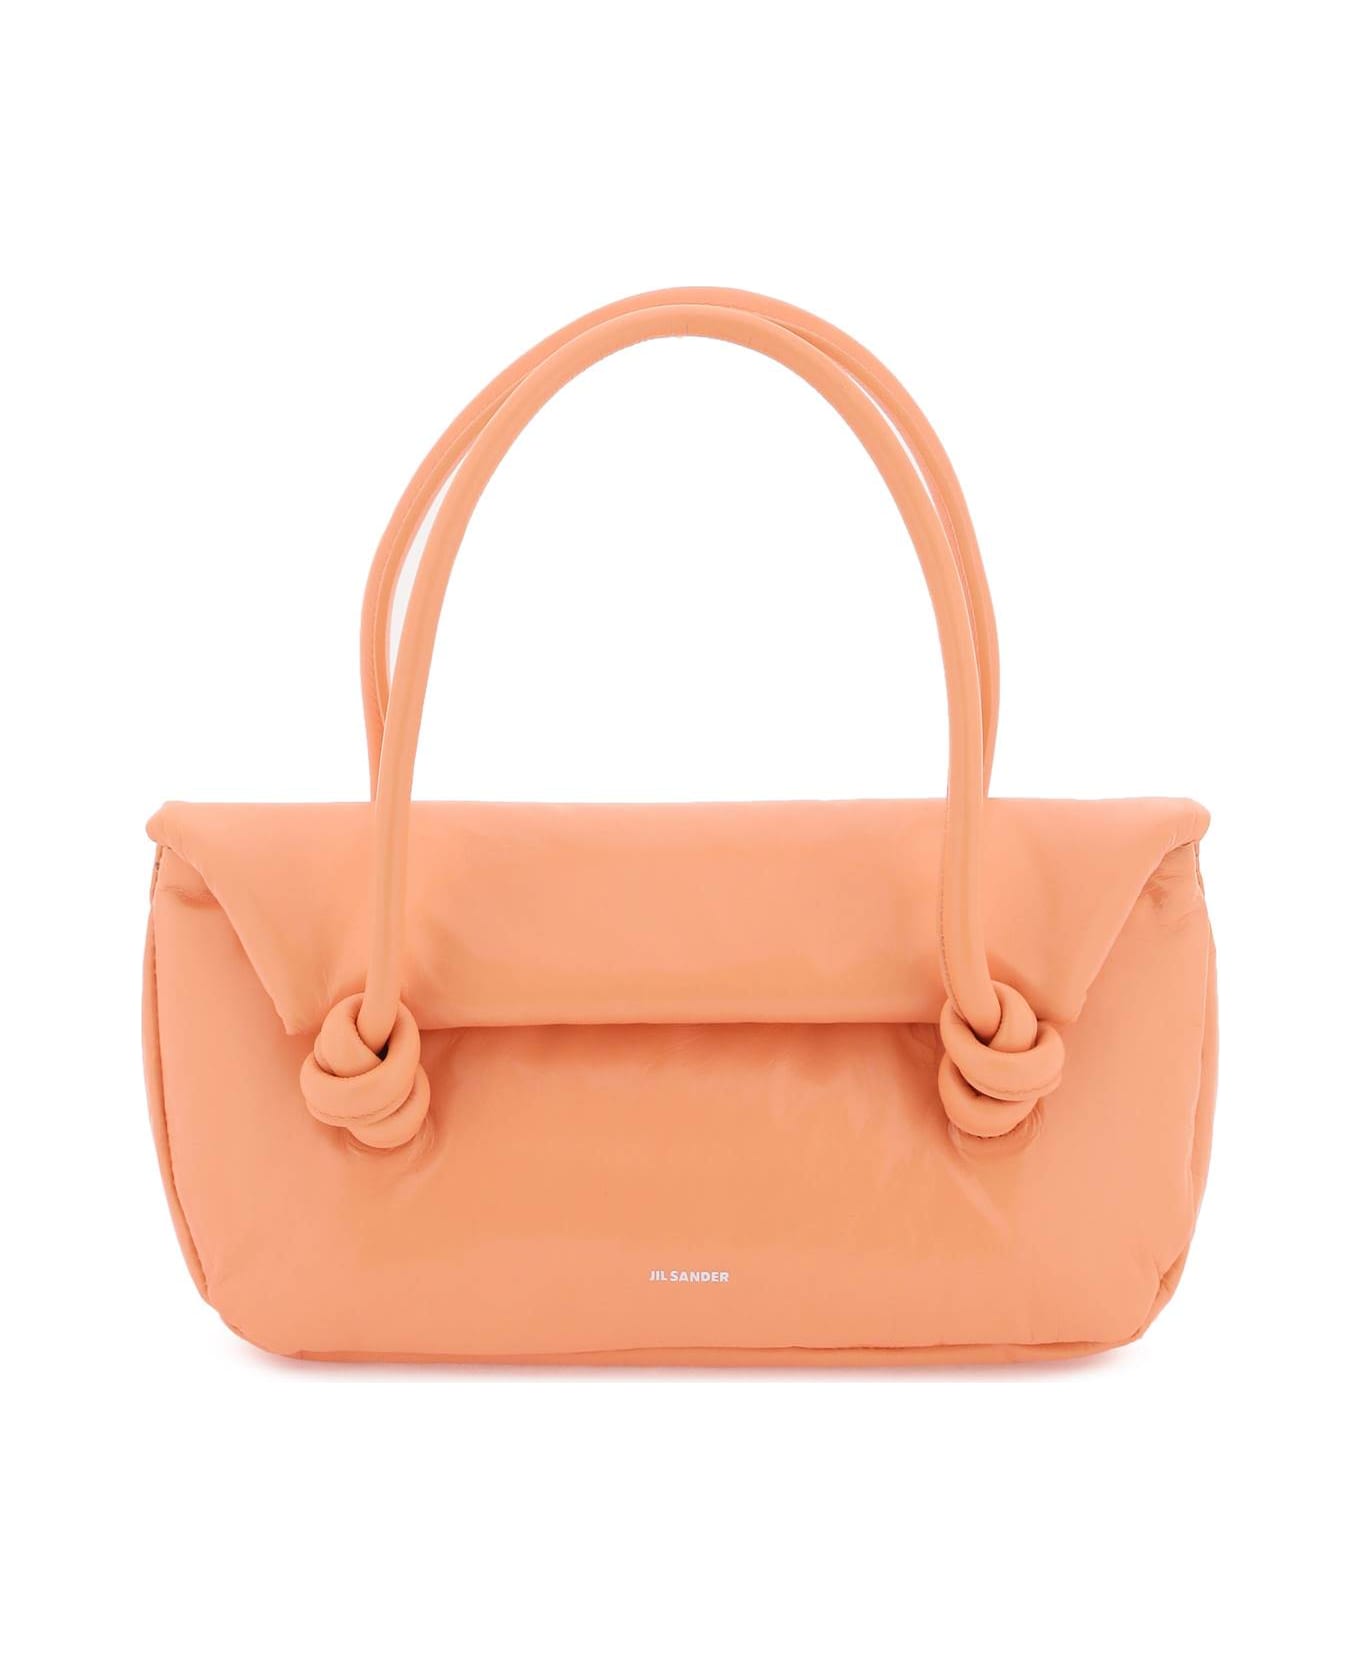 Jil Sander Patent Leather Small Shoulder Bag - PEACH PEARL (Pink)